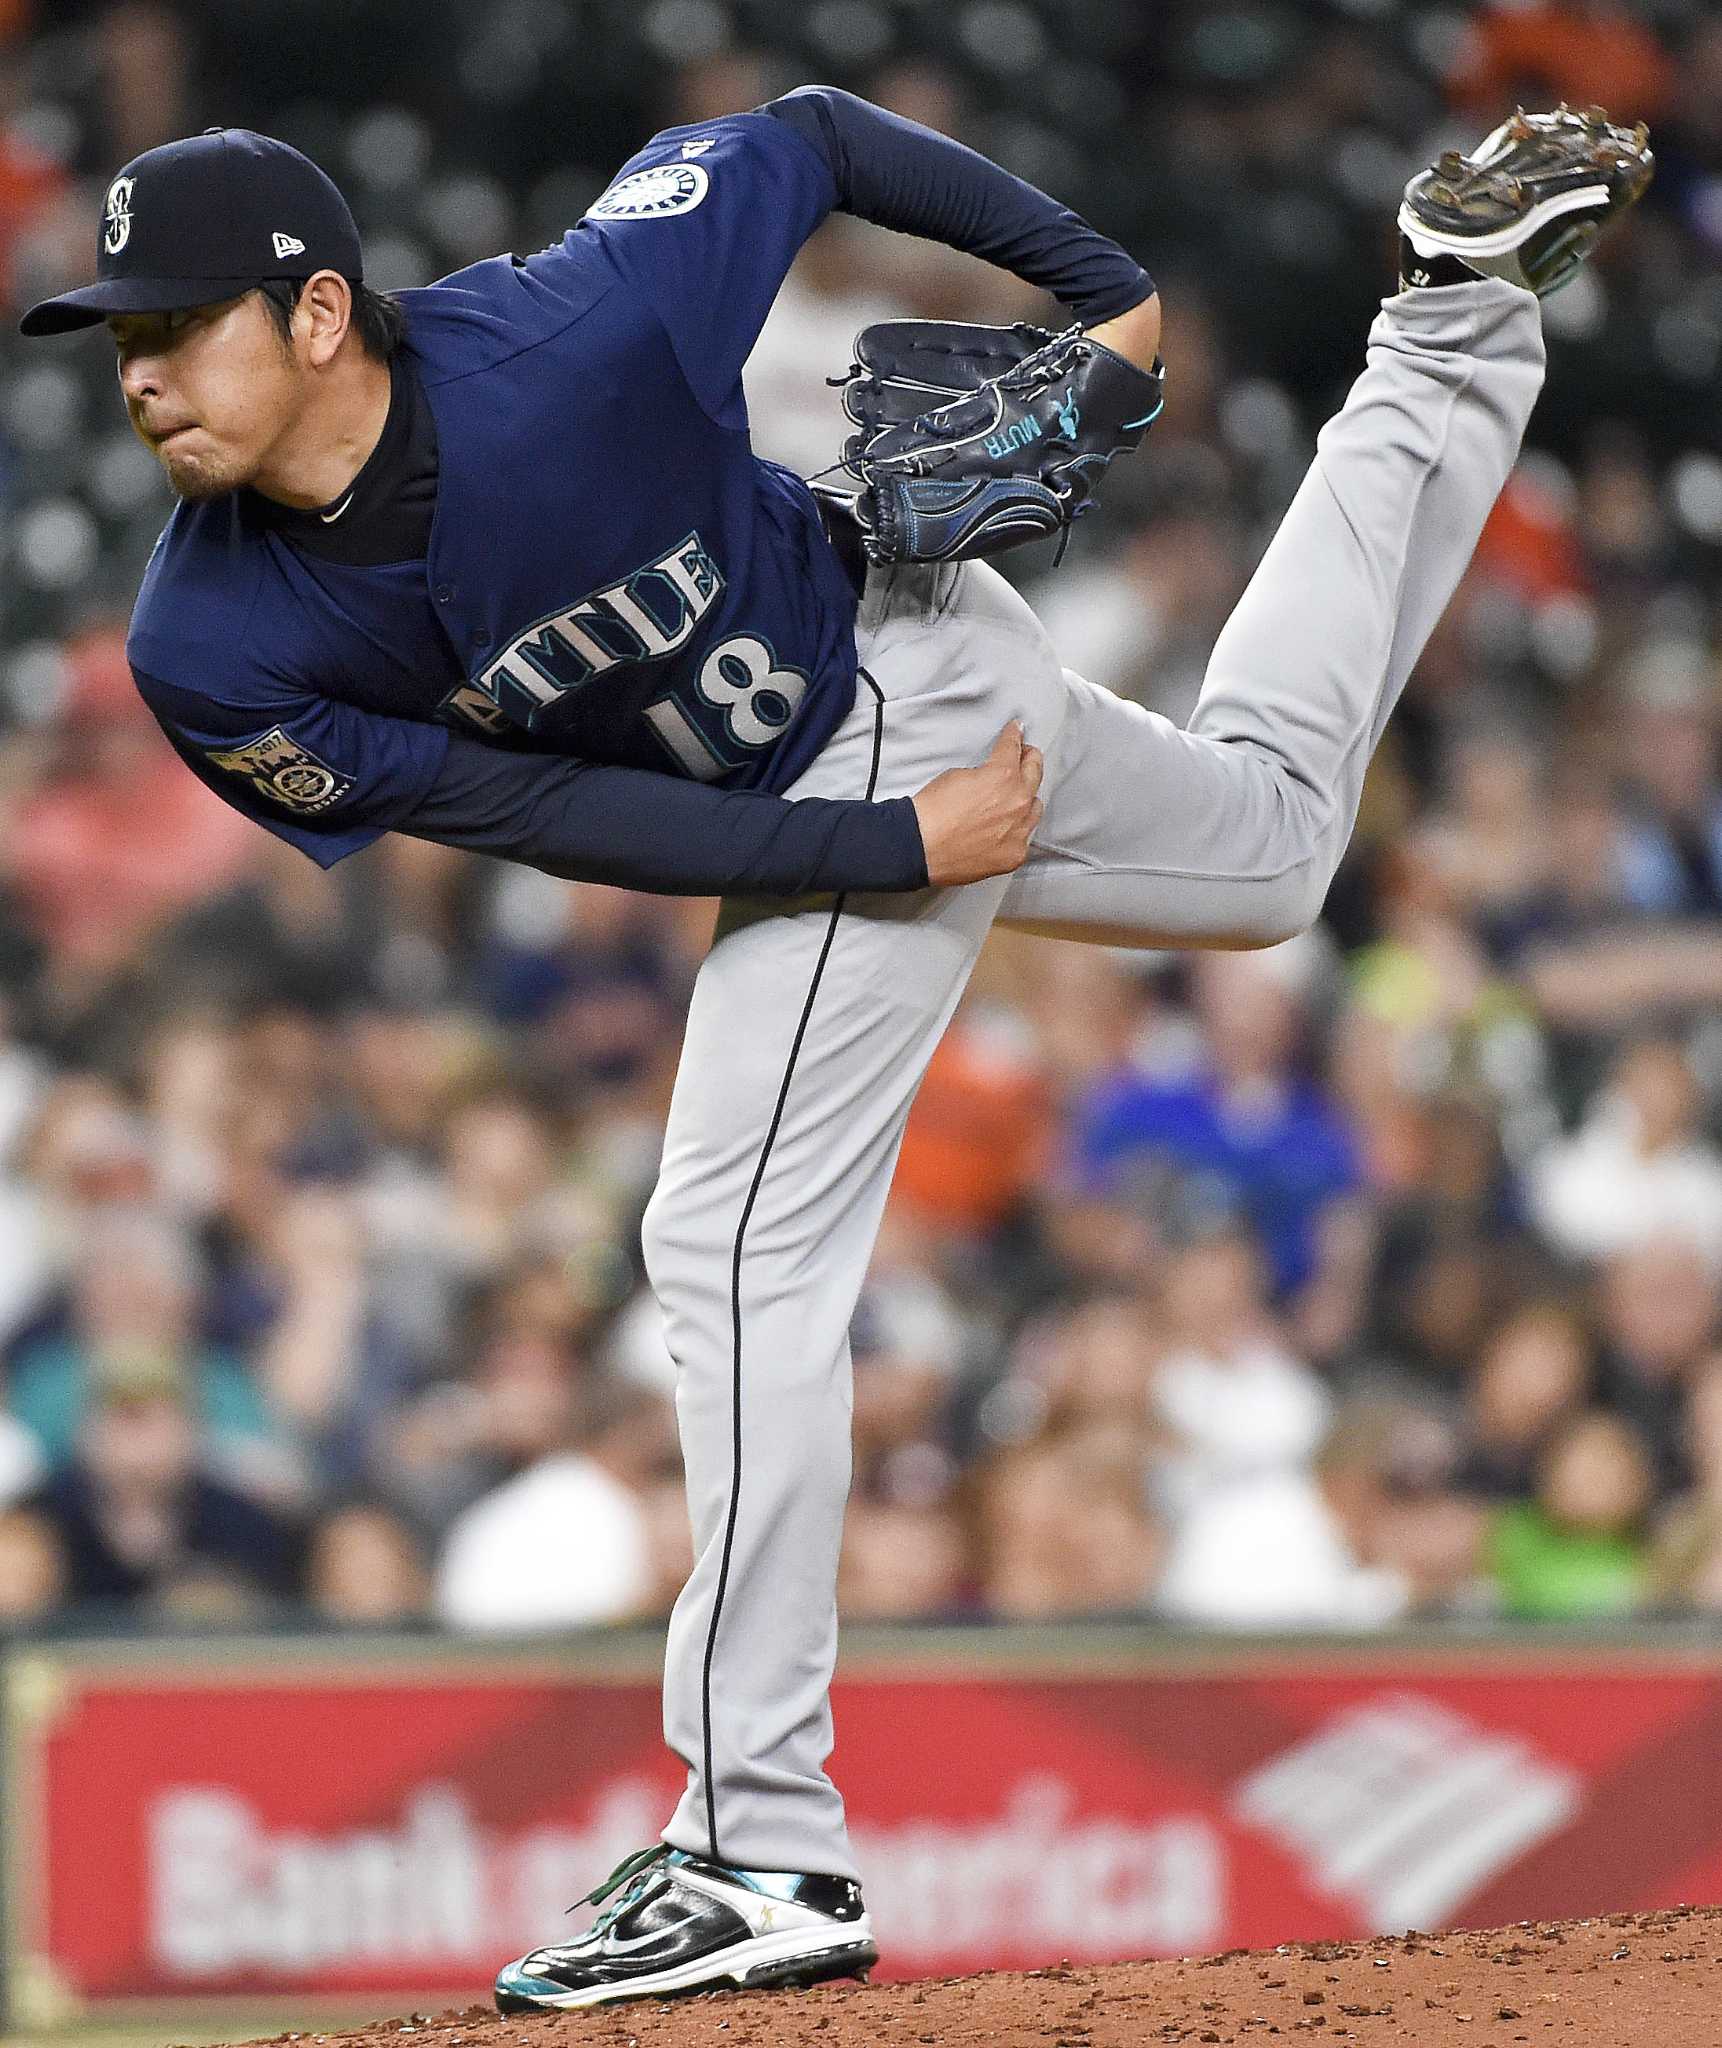 Baseball player Hisashi Iwakuma pitches